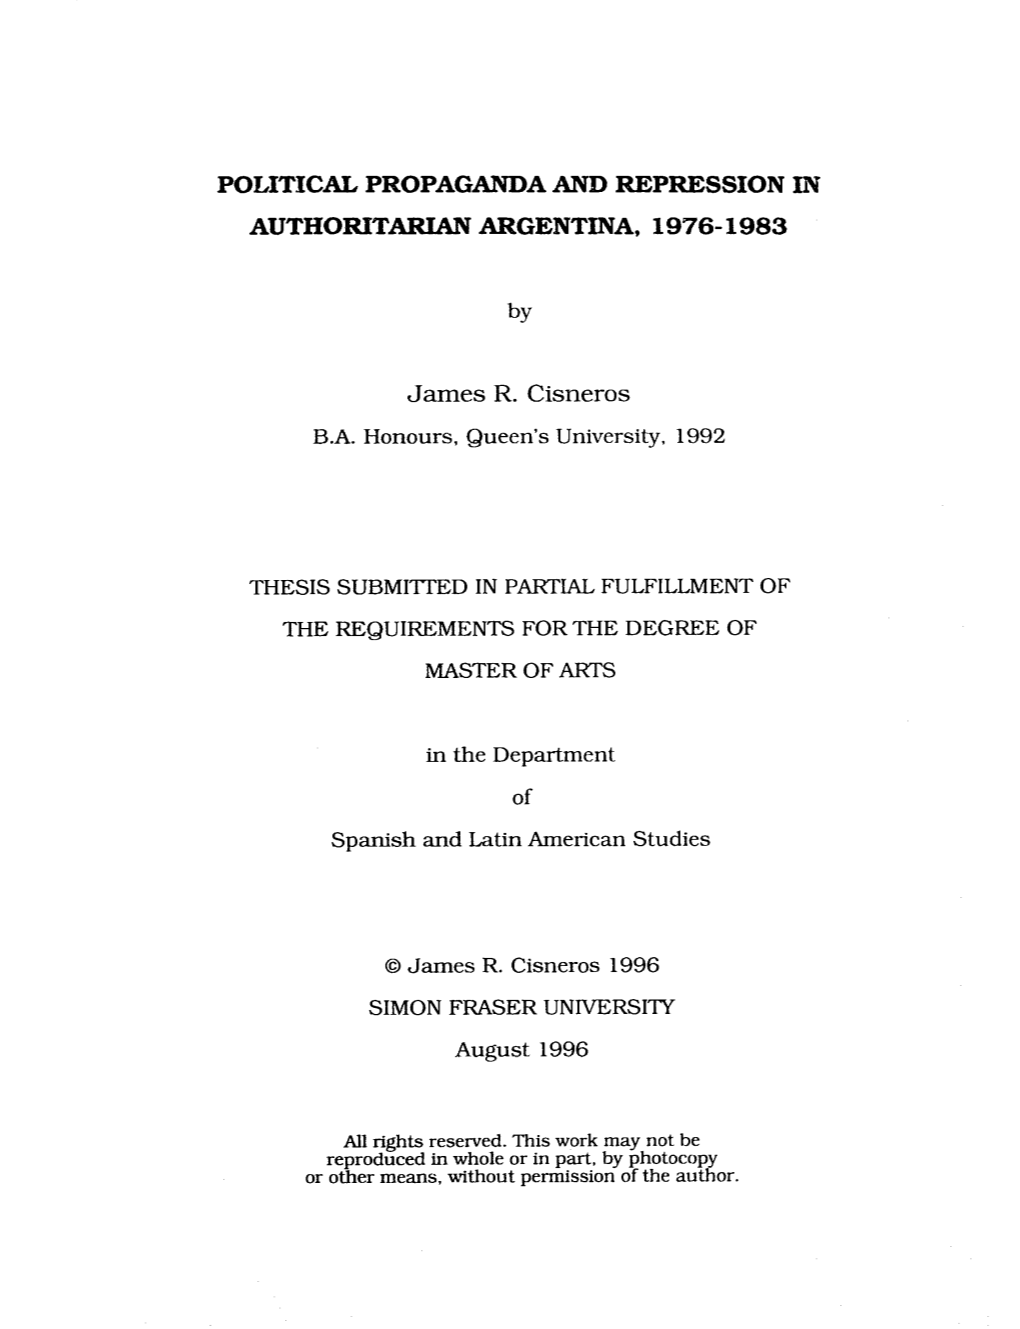 Political Propaganda and Repression in Authoritarian Argentina, 1976-1983